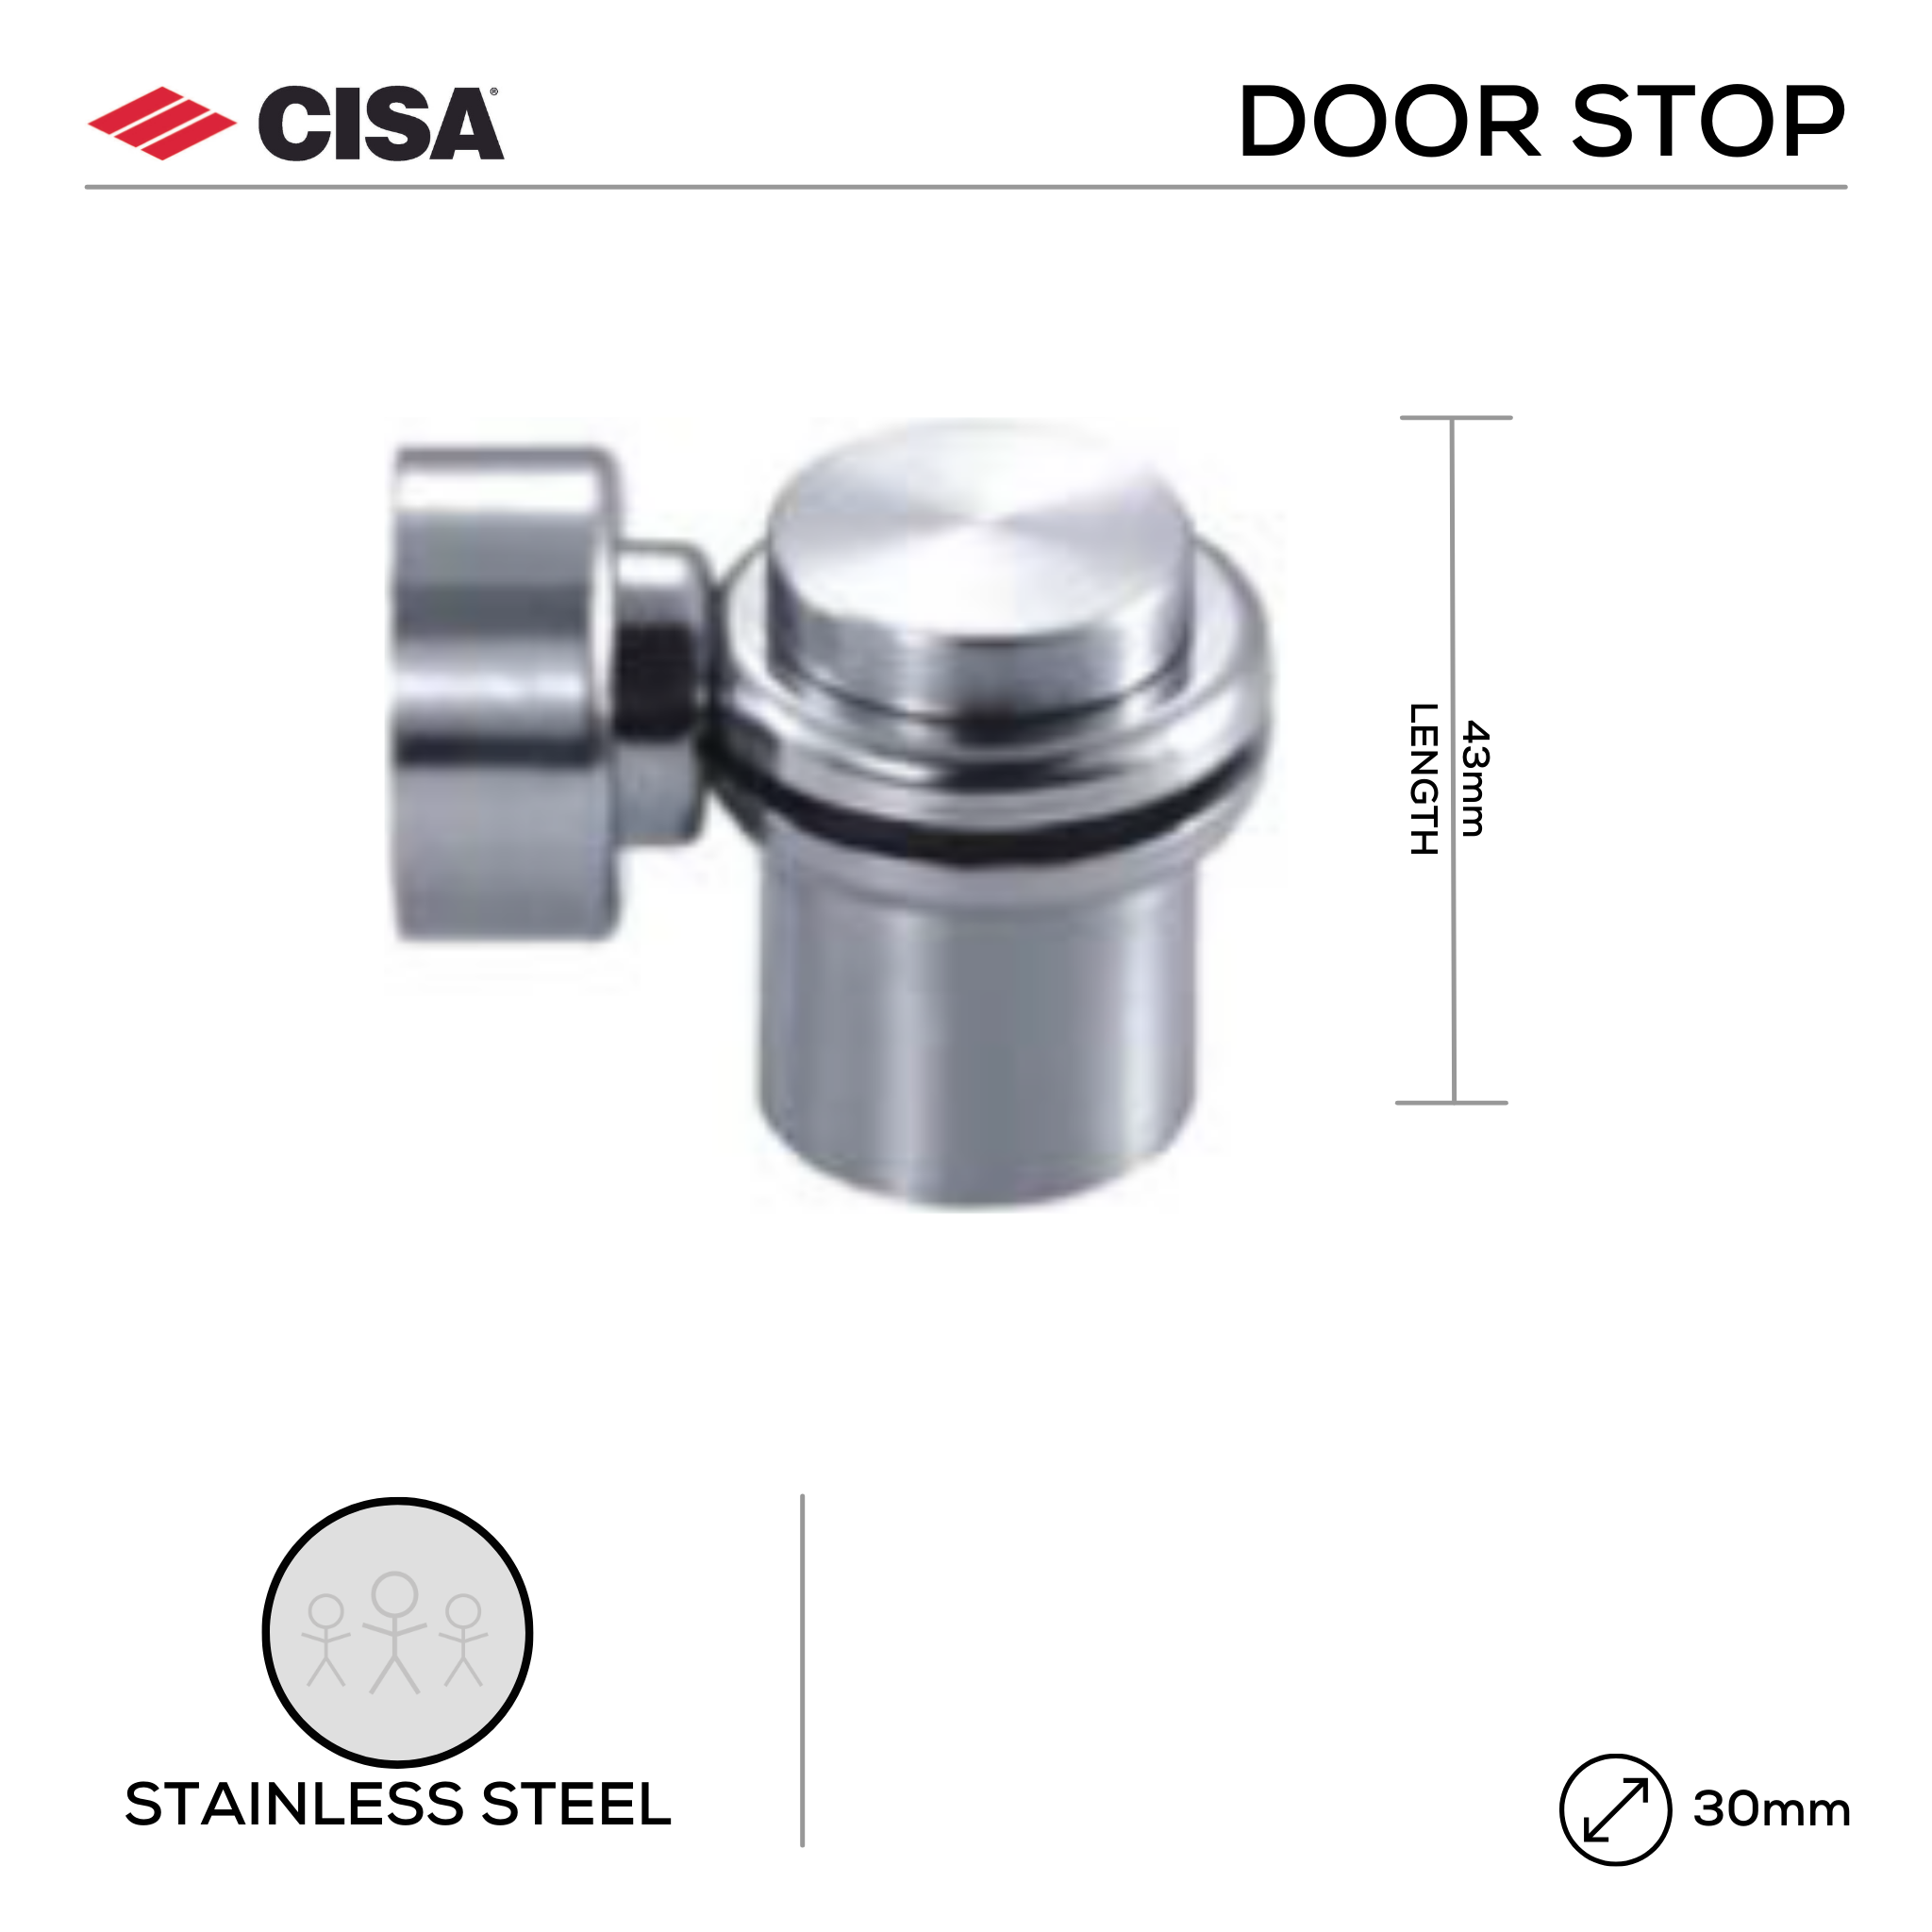 FMDS03.SS, Door Stop, Floor Mounted, Magnetic, 43mm (l) x 30mm (Ø), Stainless Steel, CISA